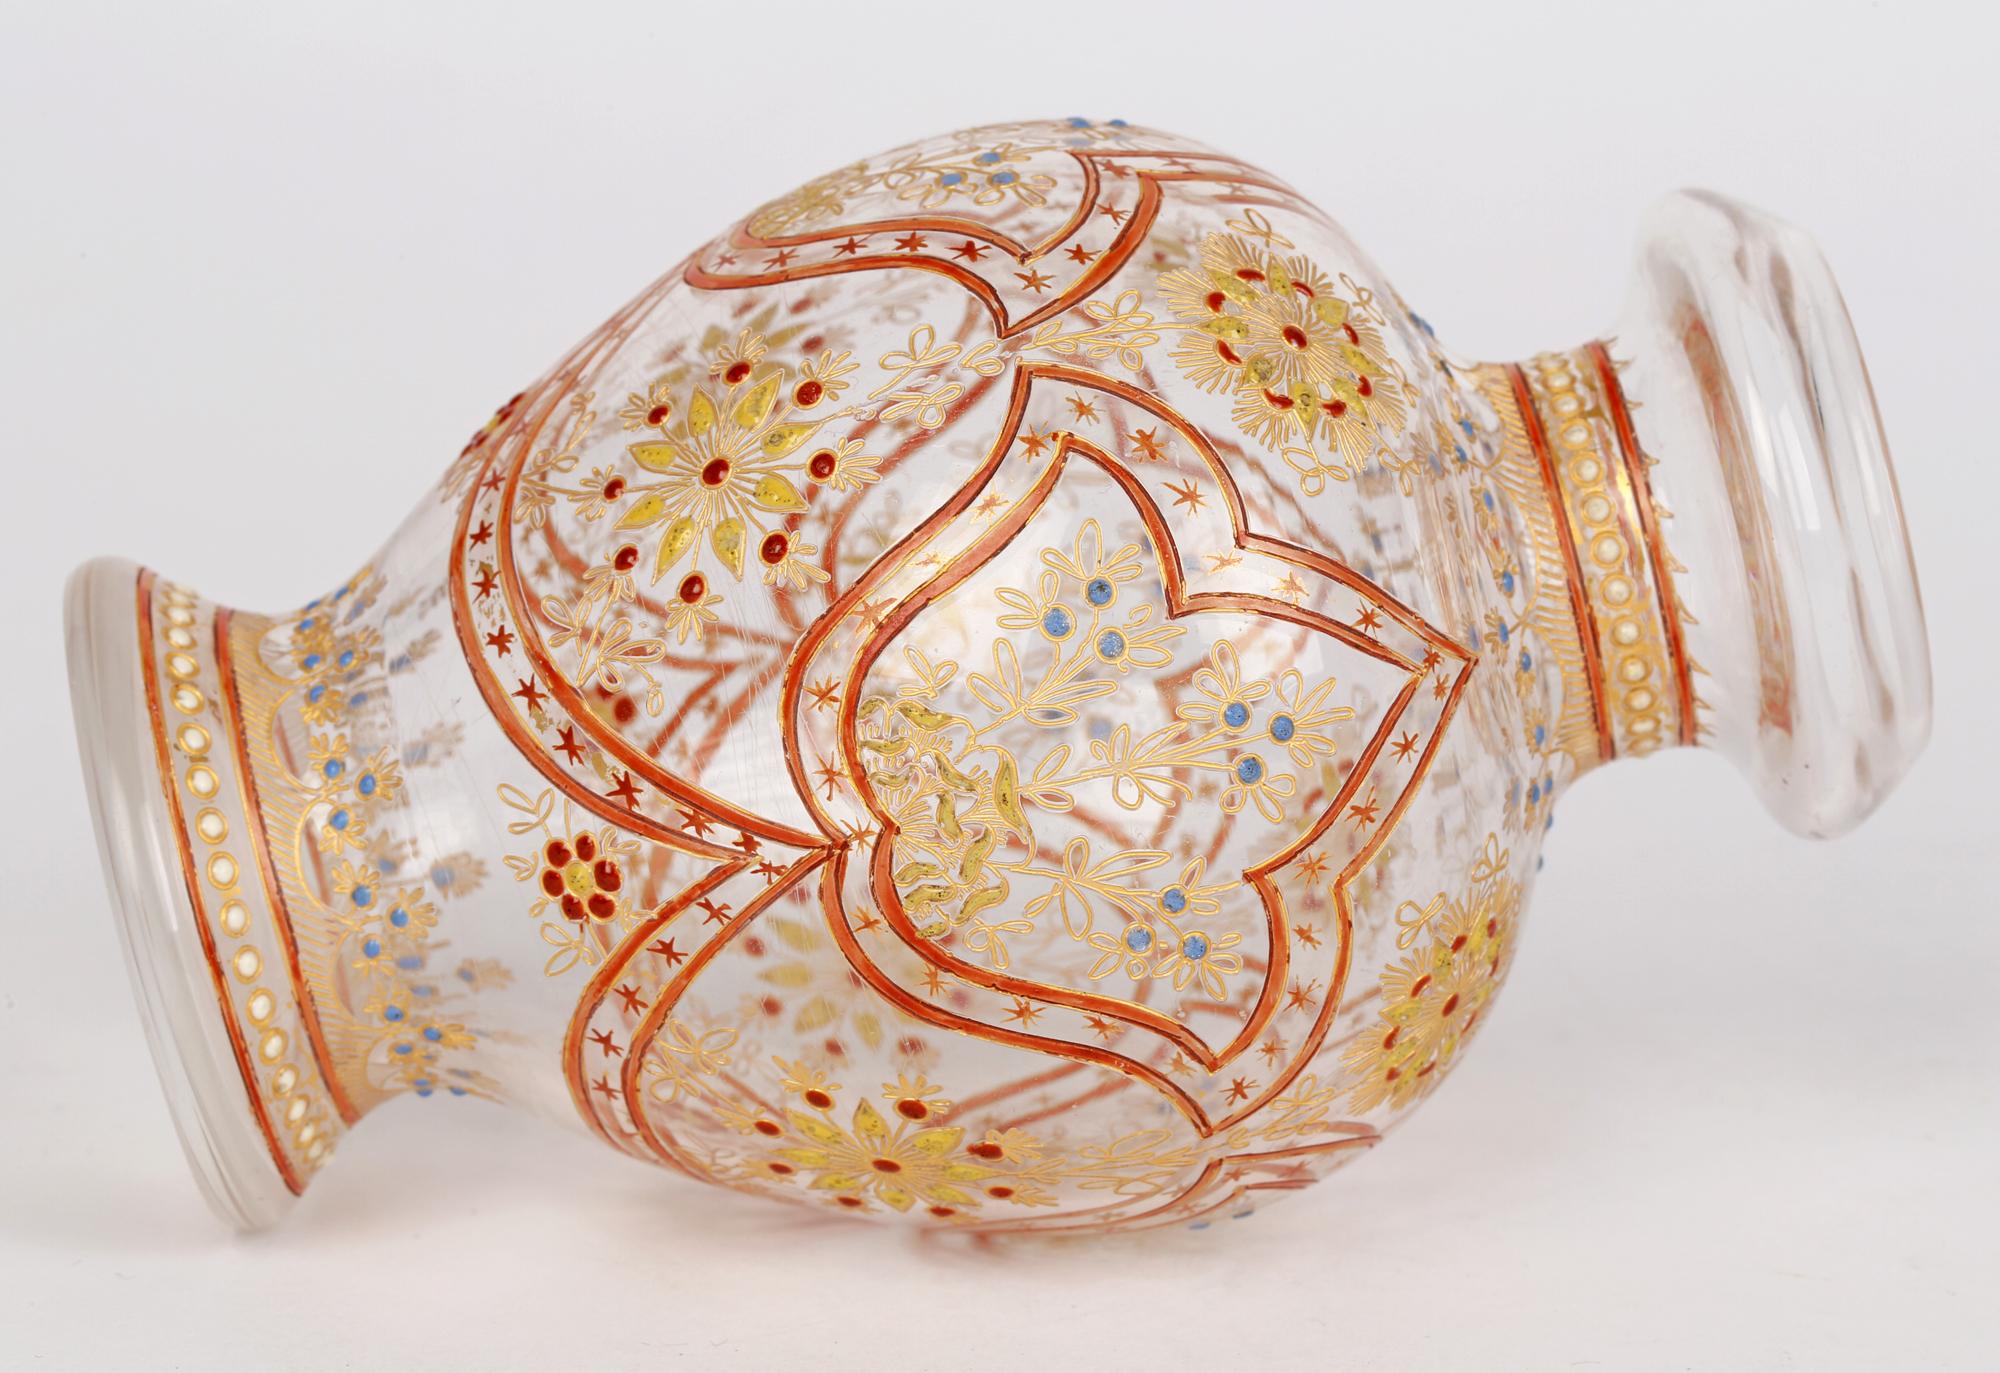 J & L Lobmeyr Viennese Enamelled Persian-Style Glass Vase For Sale 6